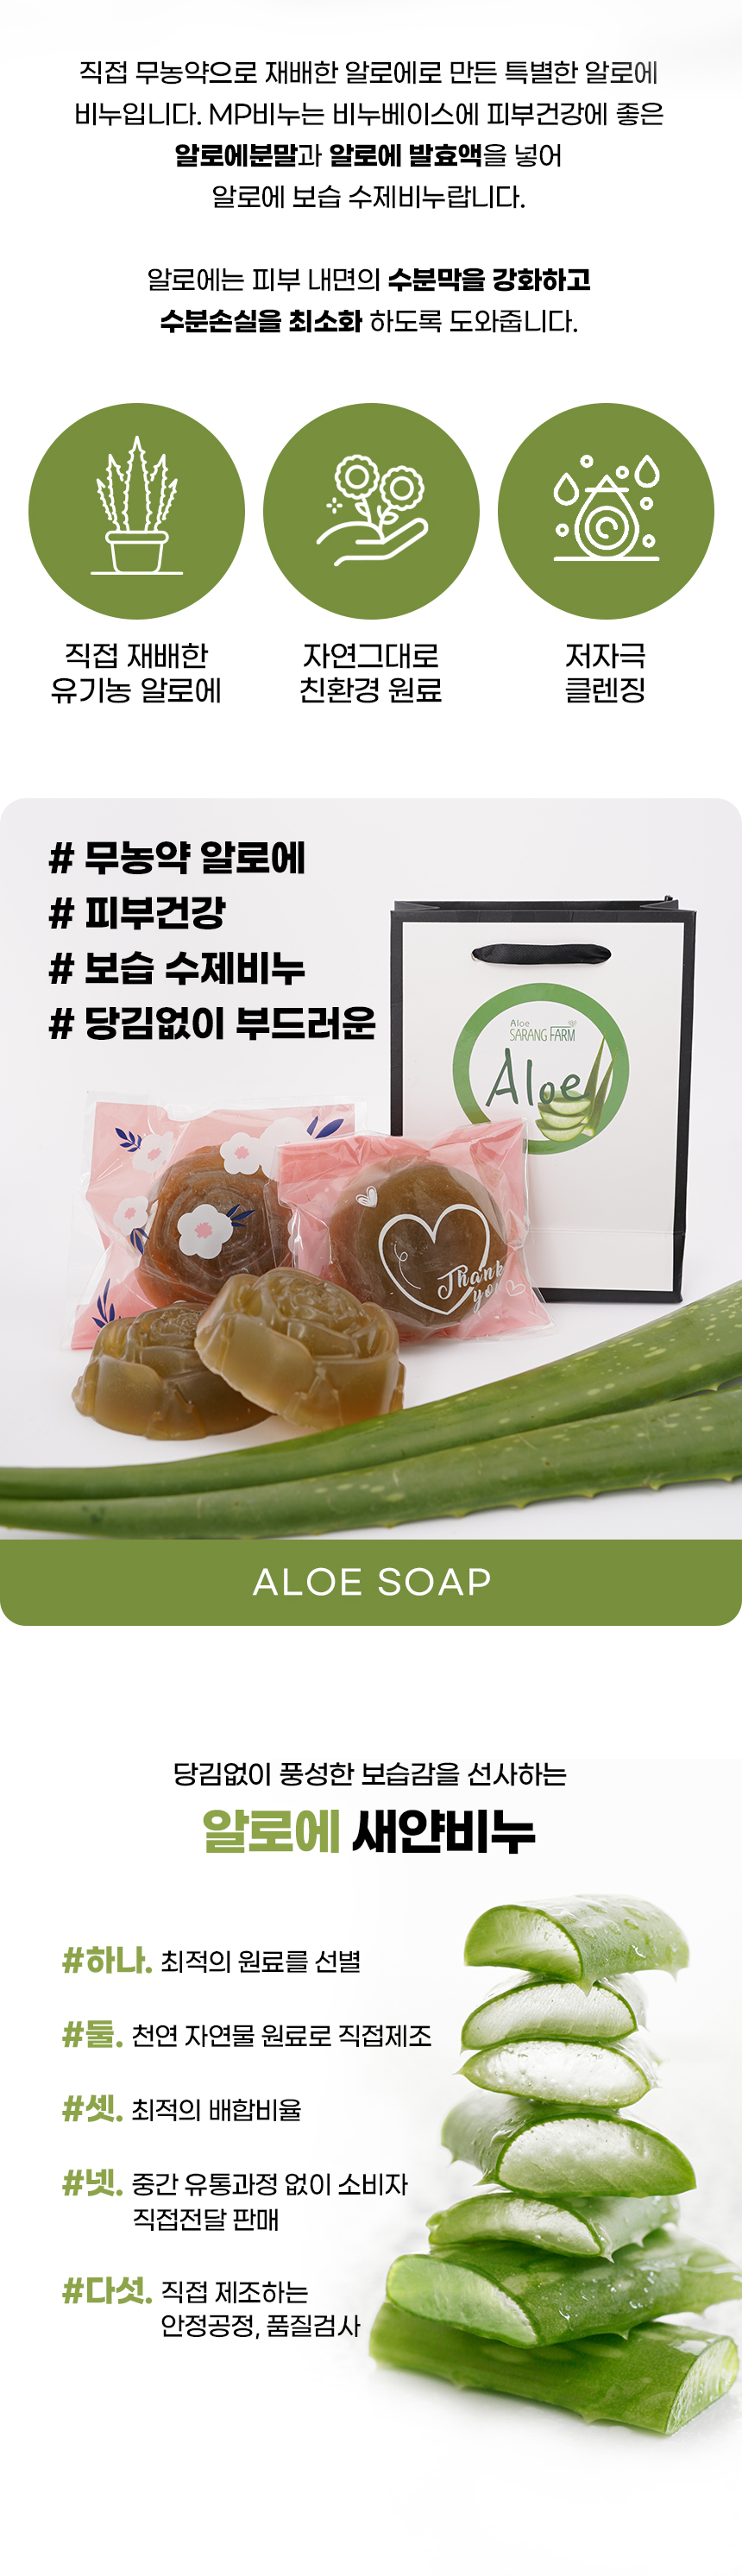 aloe_soap_03.png